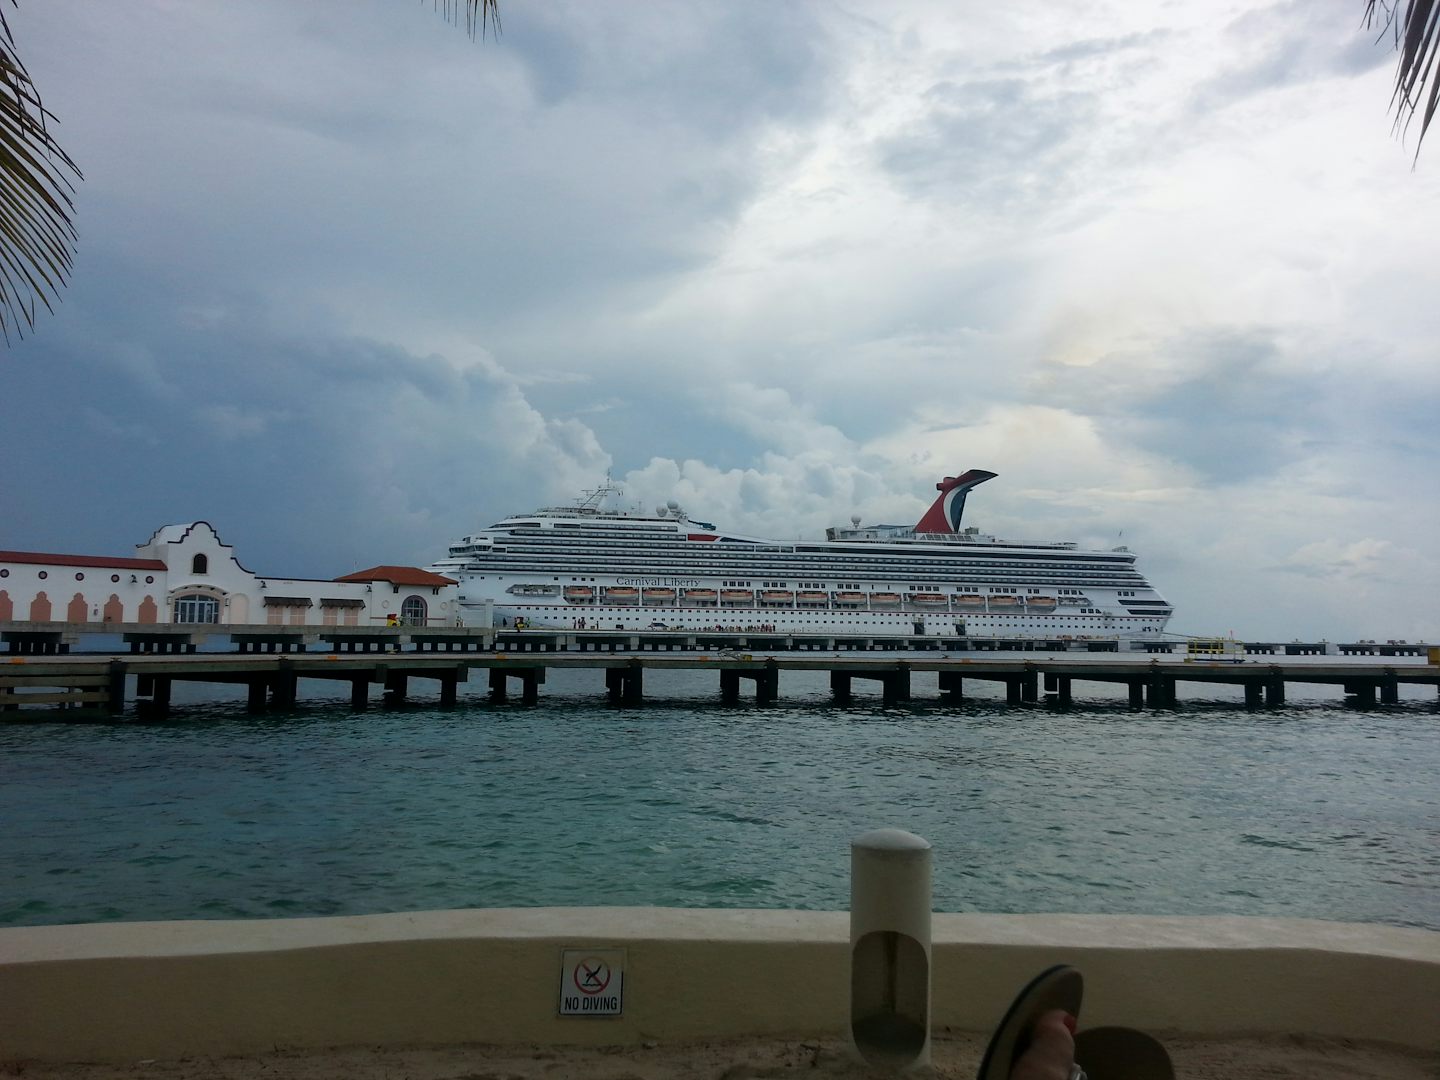 Carnival Liberty docked at Cozumel